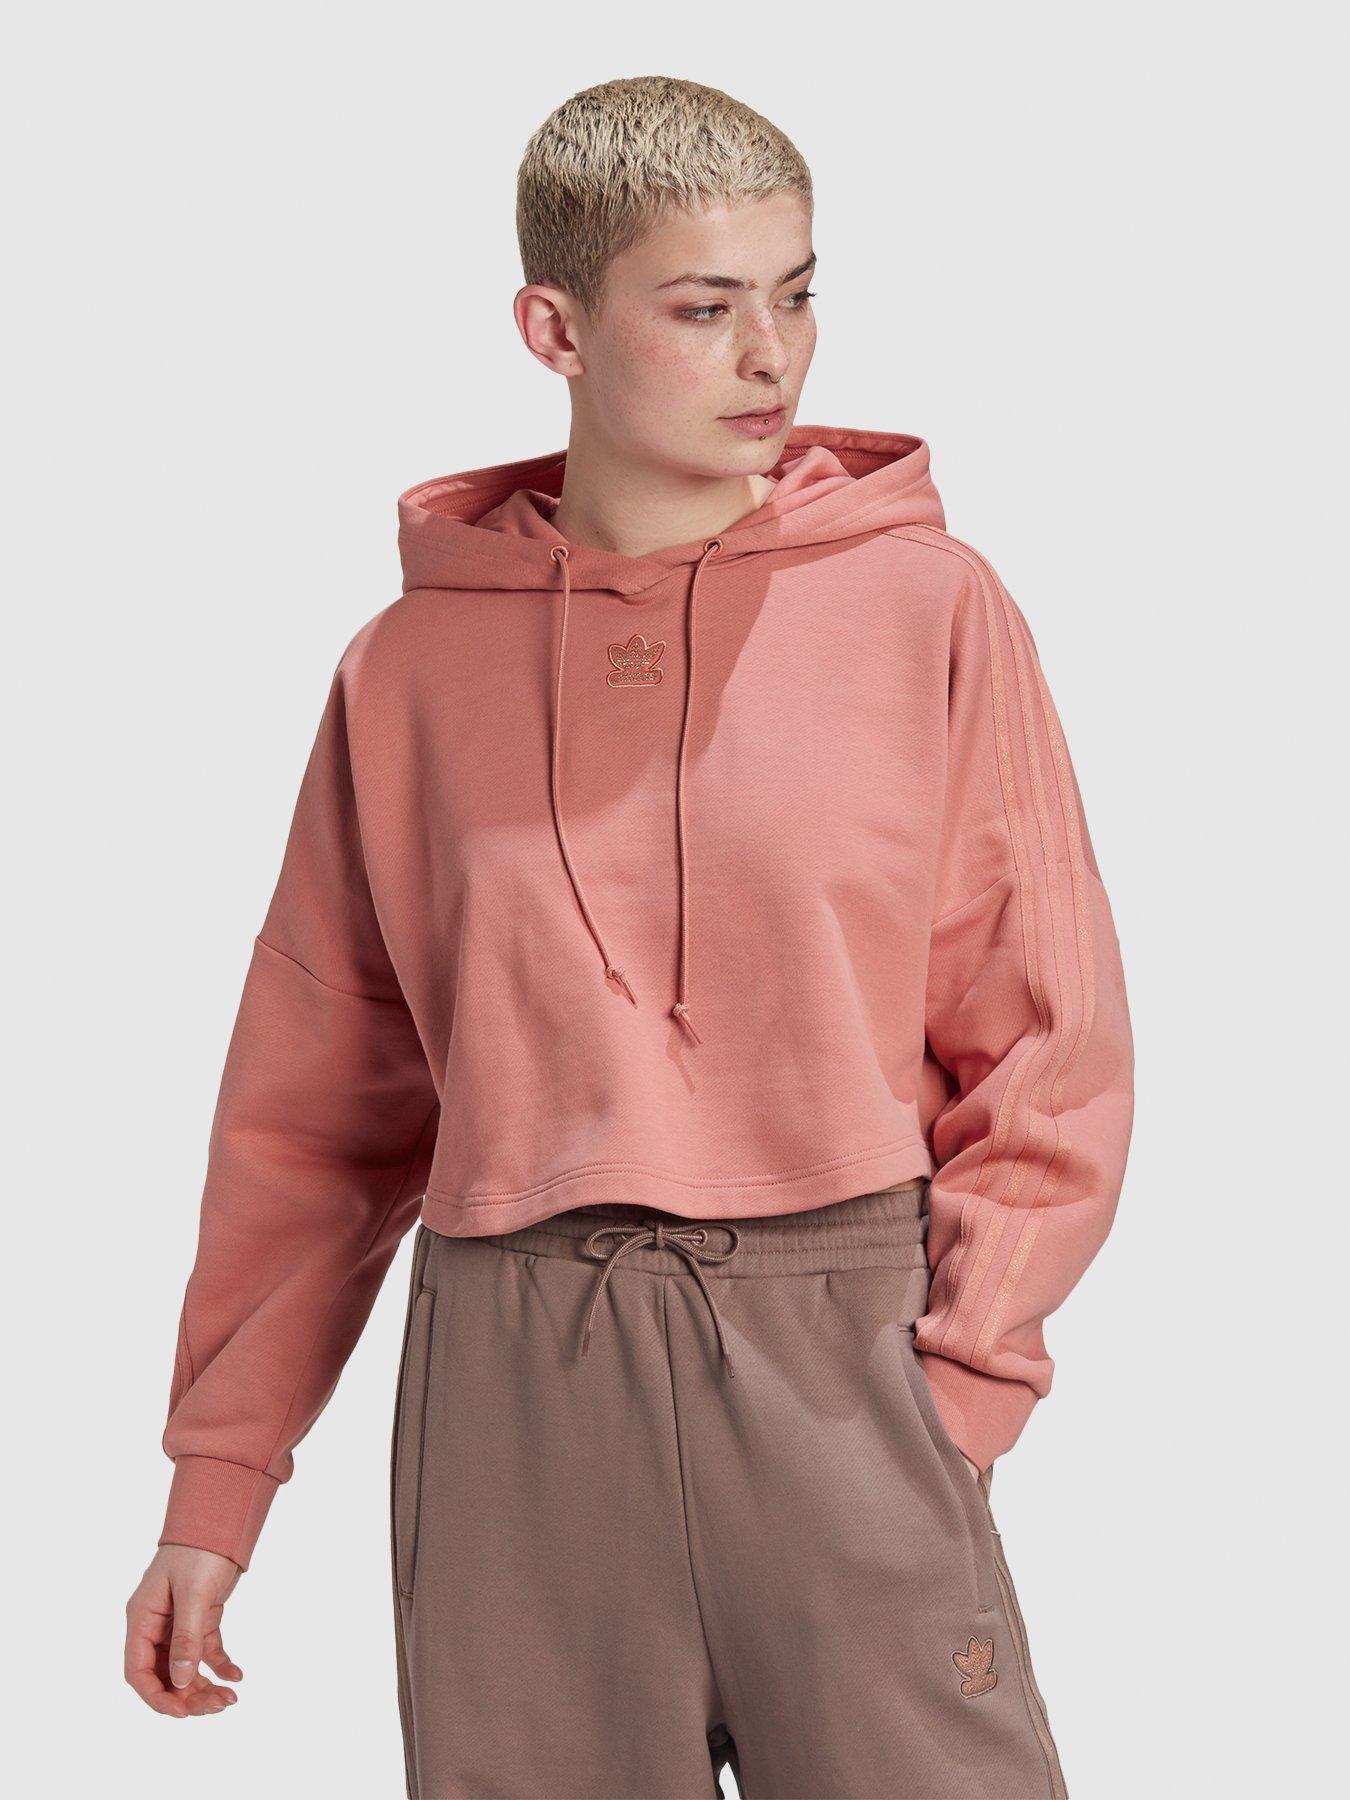 pink adidas originals hoodie